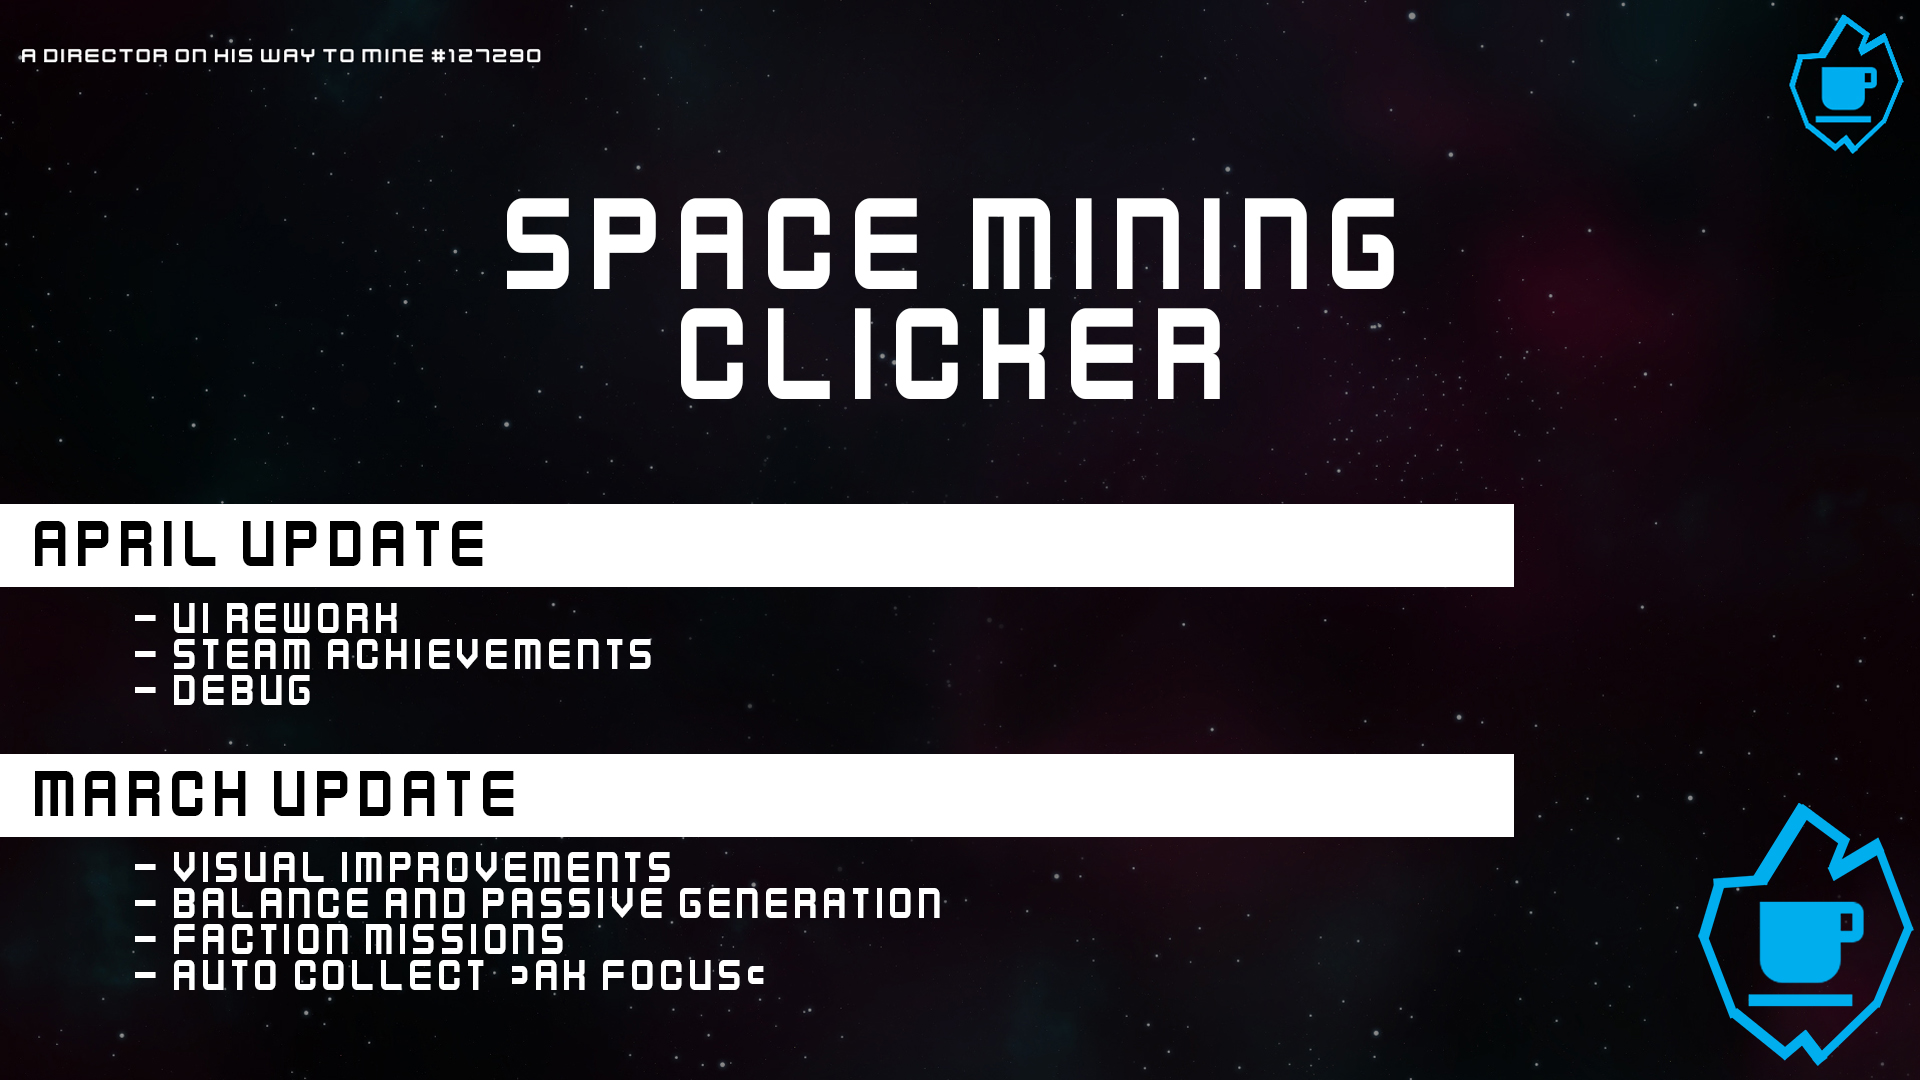 Space mining clicker screenshot